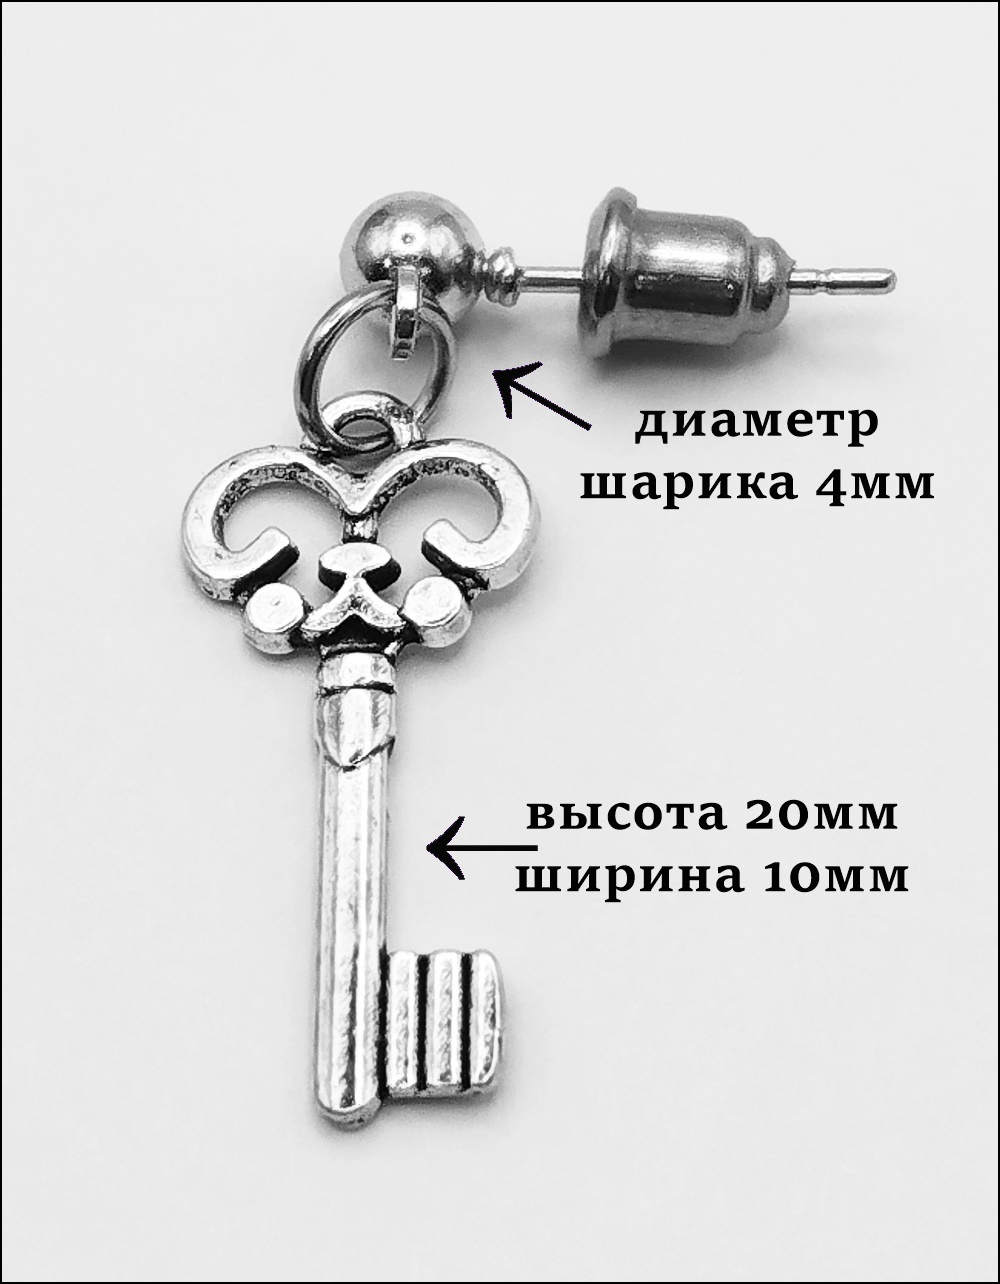 Серьги набор "Наручники, ключи" для пирсинга ушей.